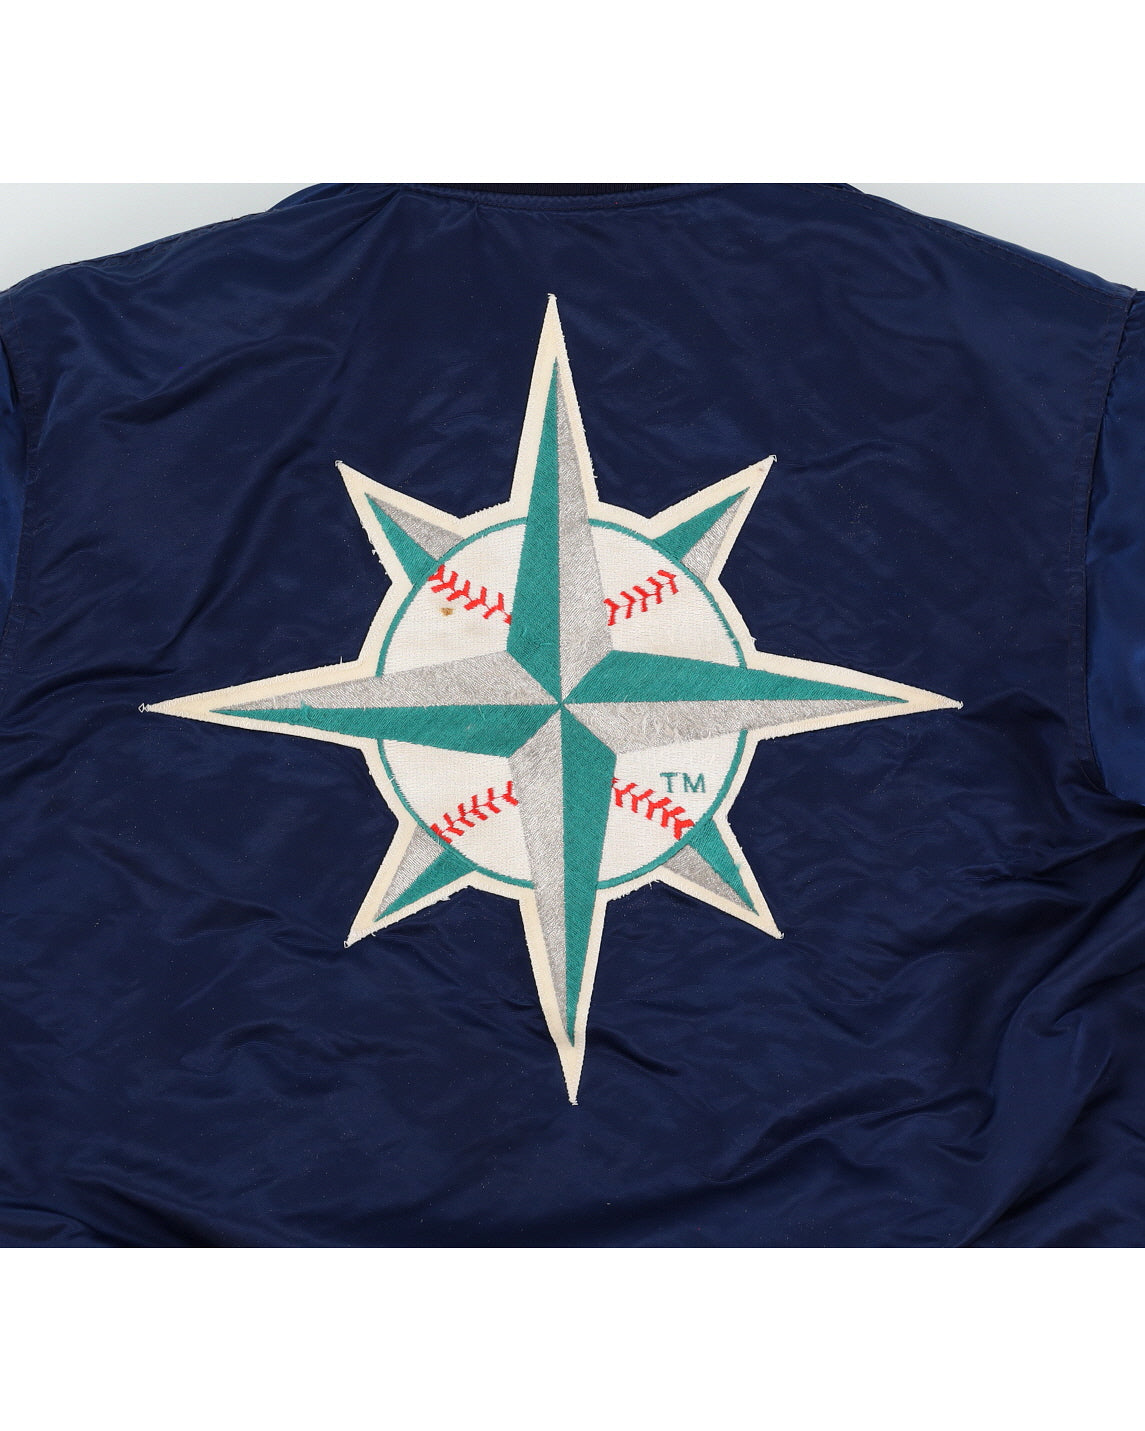 Vintage 80s Starter MLB Seattle Mariners Blue Navy Bomber Jacket - M